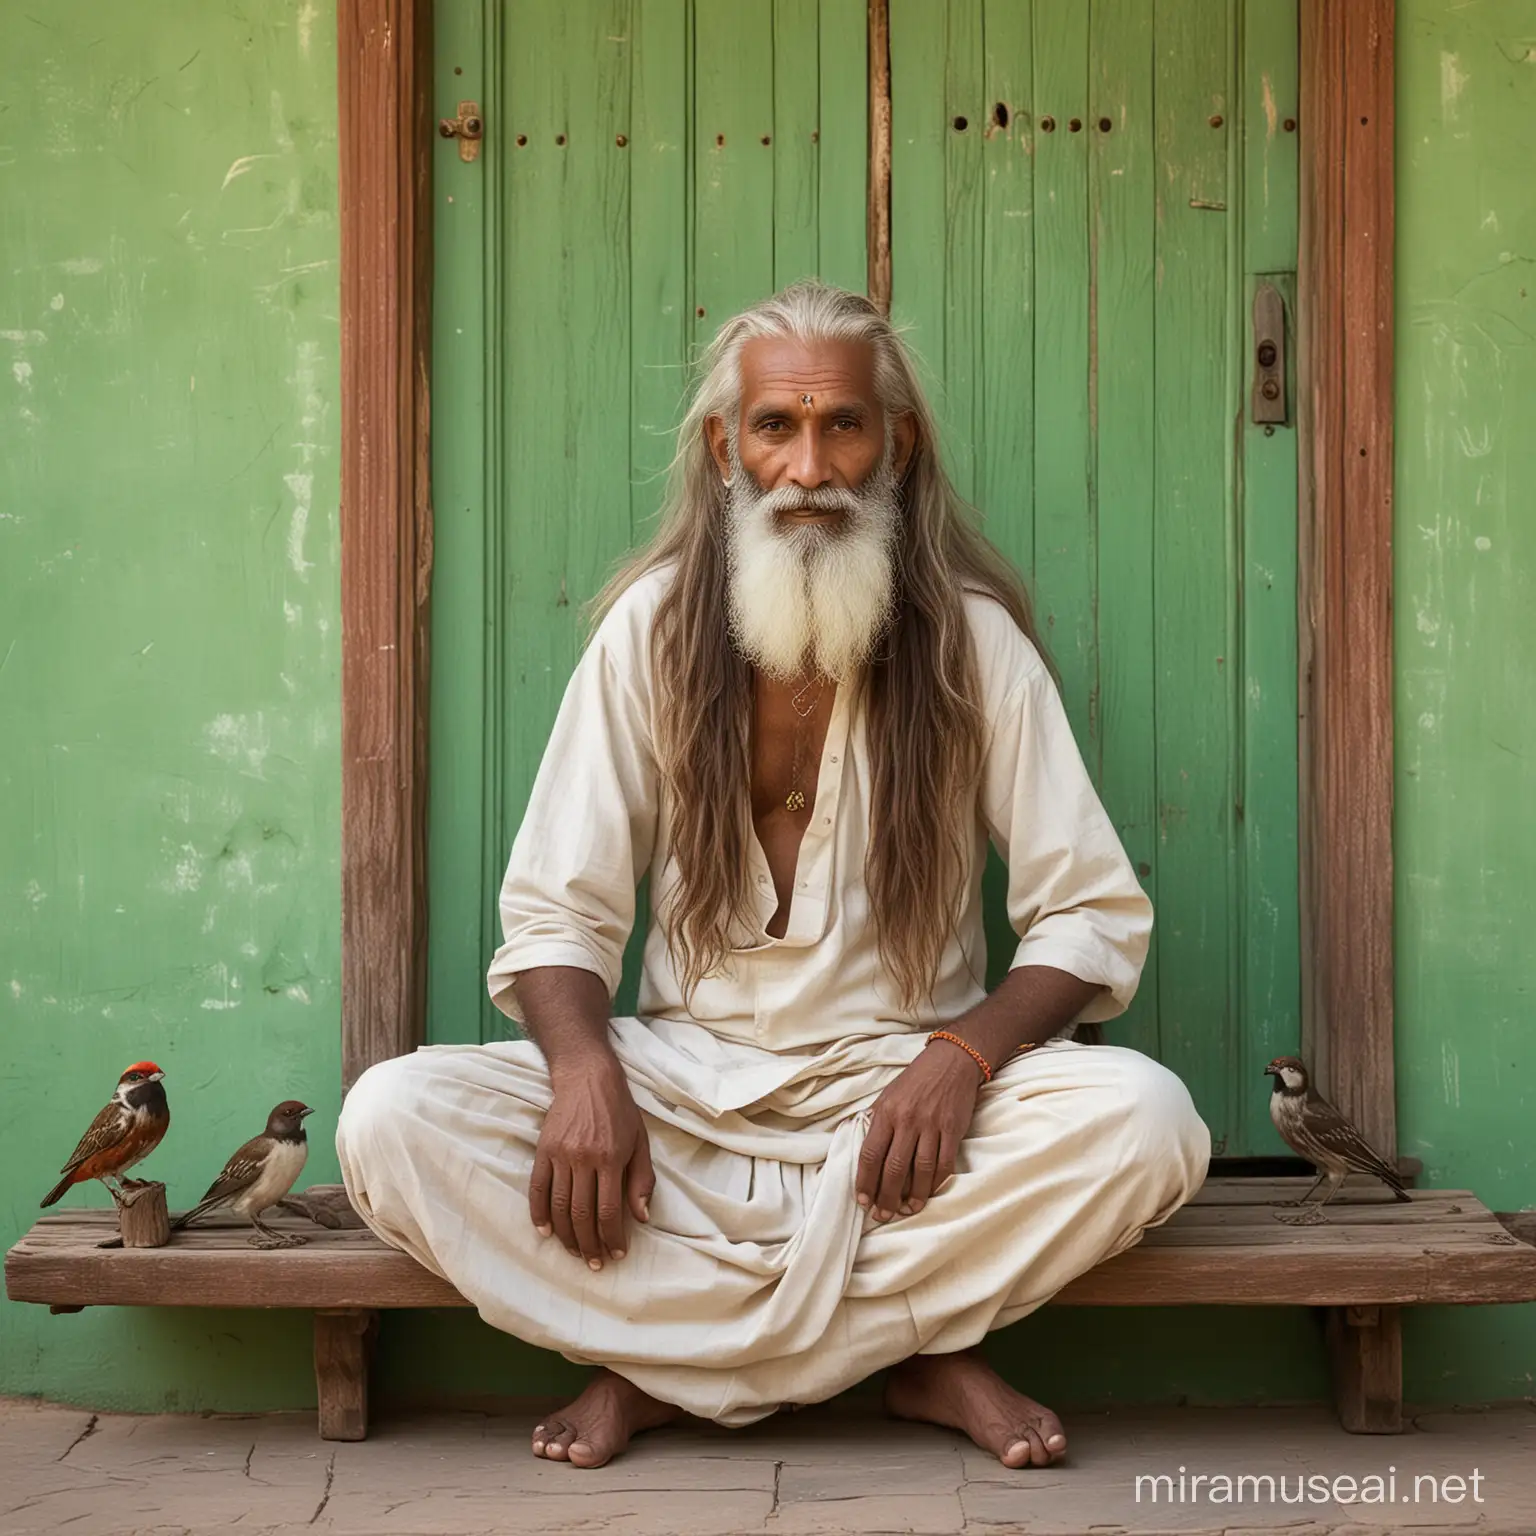 Elderly Sadhu Contemplating by Rustic Rajasthan Door in Benares